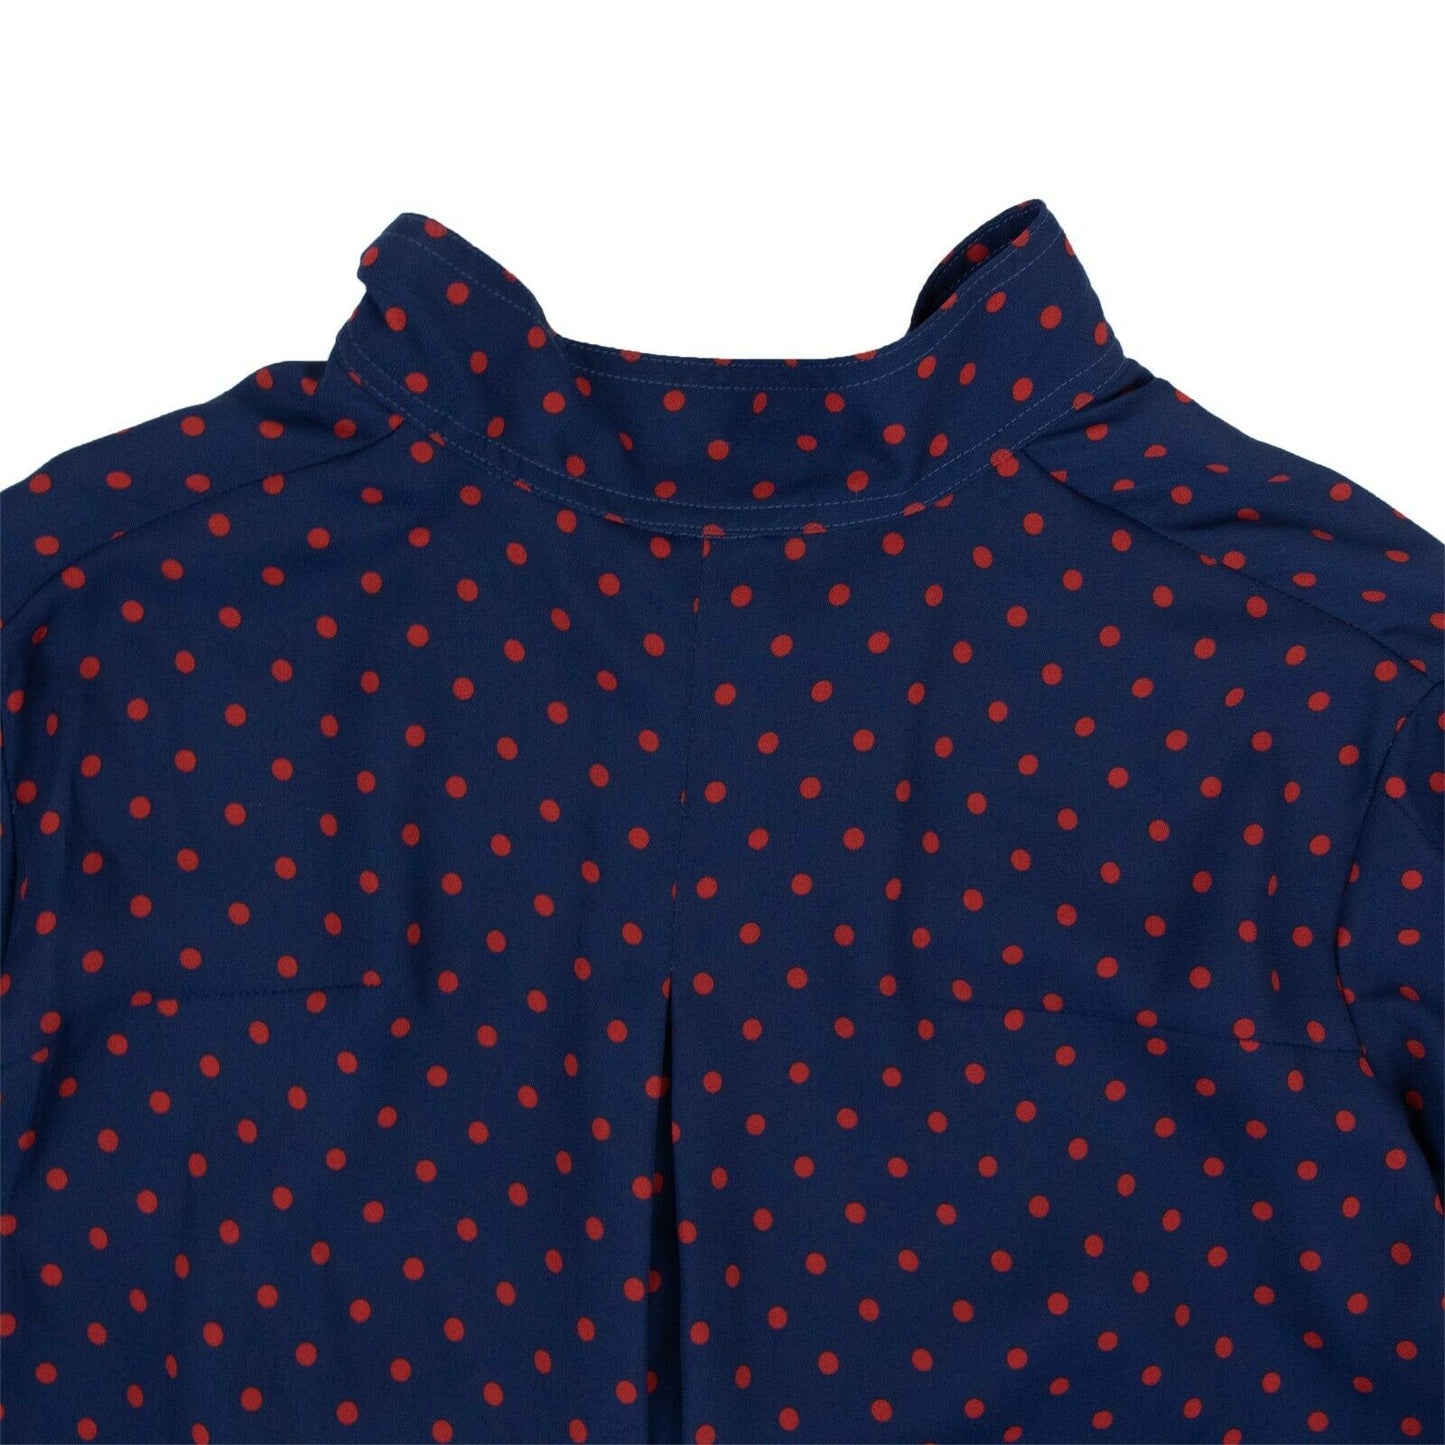 Unravel Project Polka Dot Shirt - Dark Blue/Red